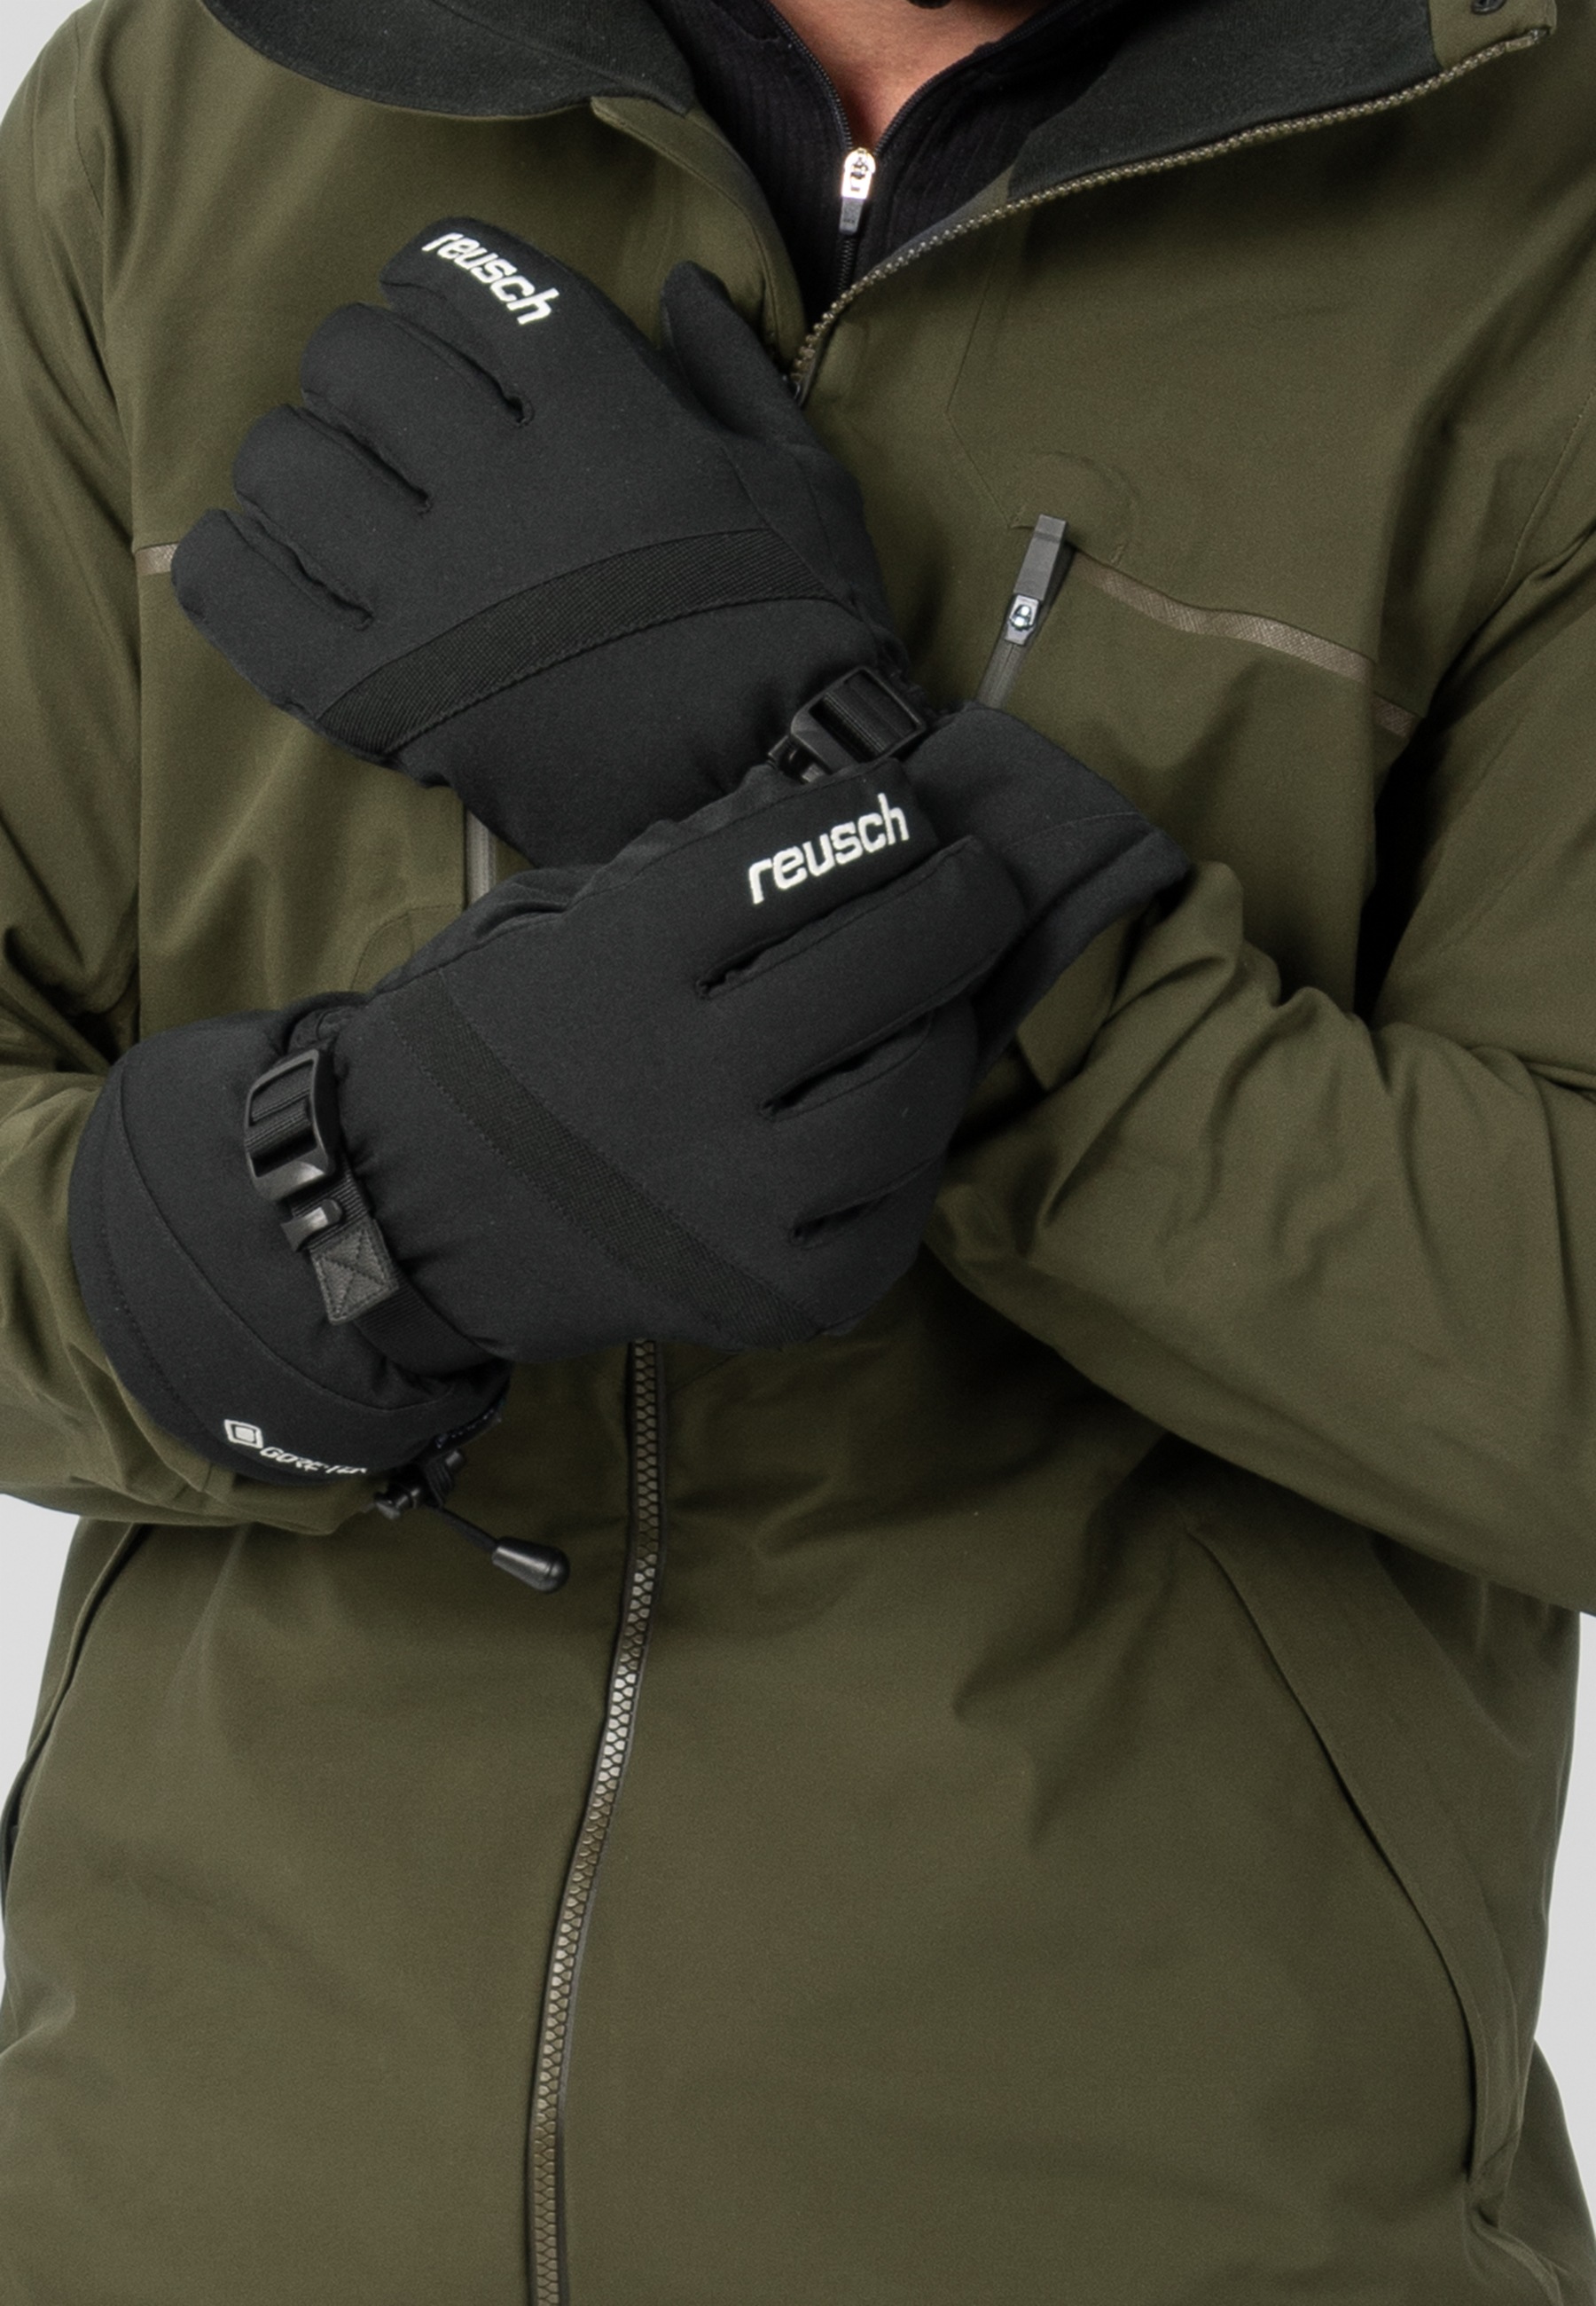 | atmungsaktivem aus im GORE-TEX«, Skihandschuhe wasserdichtem »Winter Glove Reusch I\'m Onlineshop und Material Warm walking